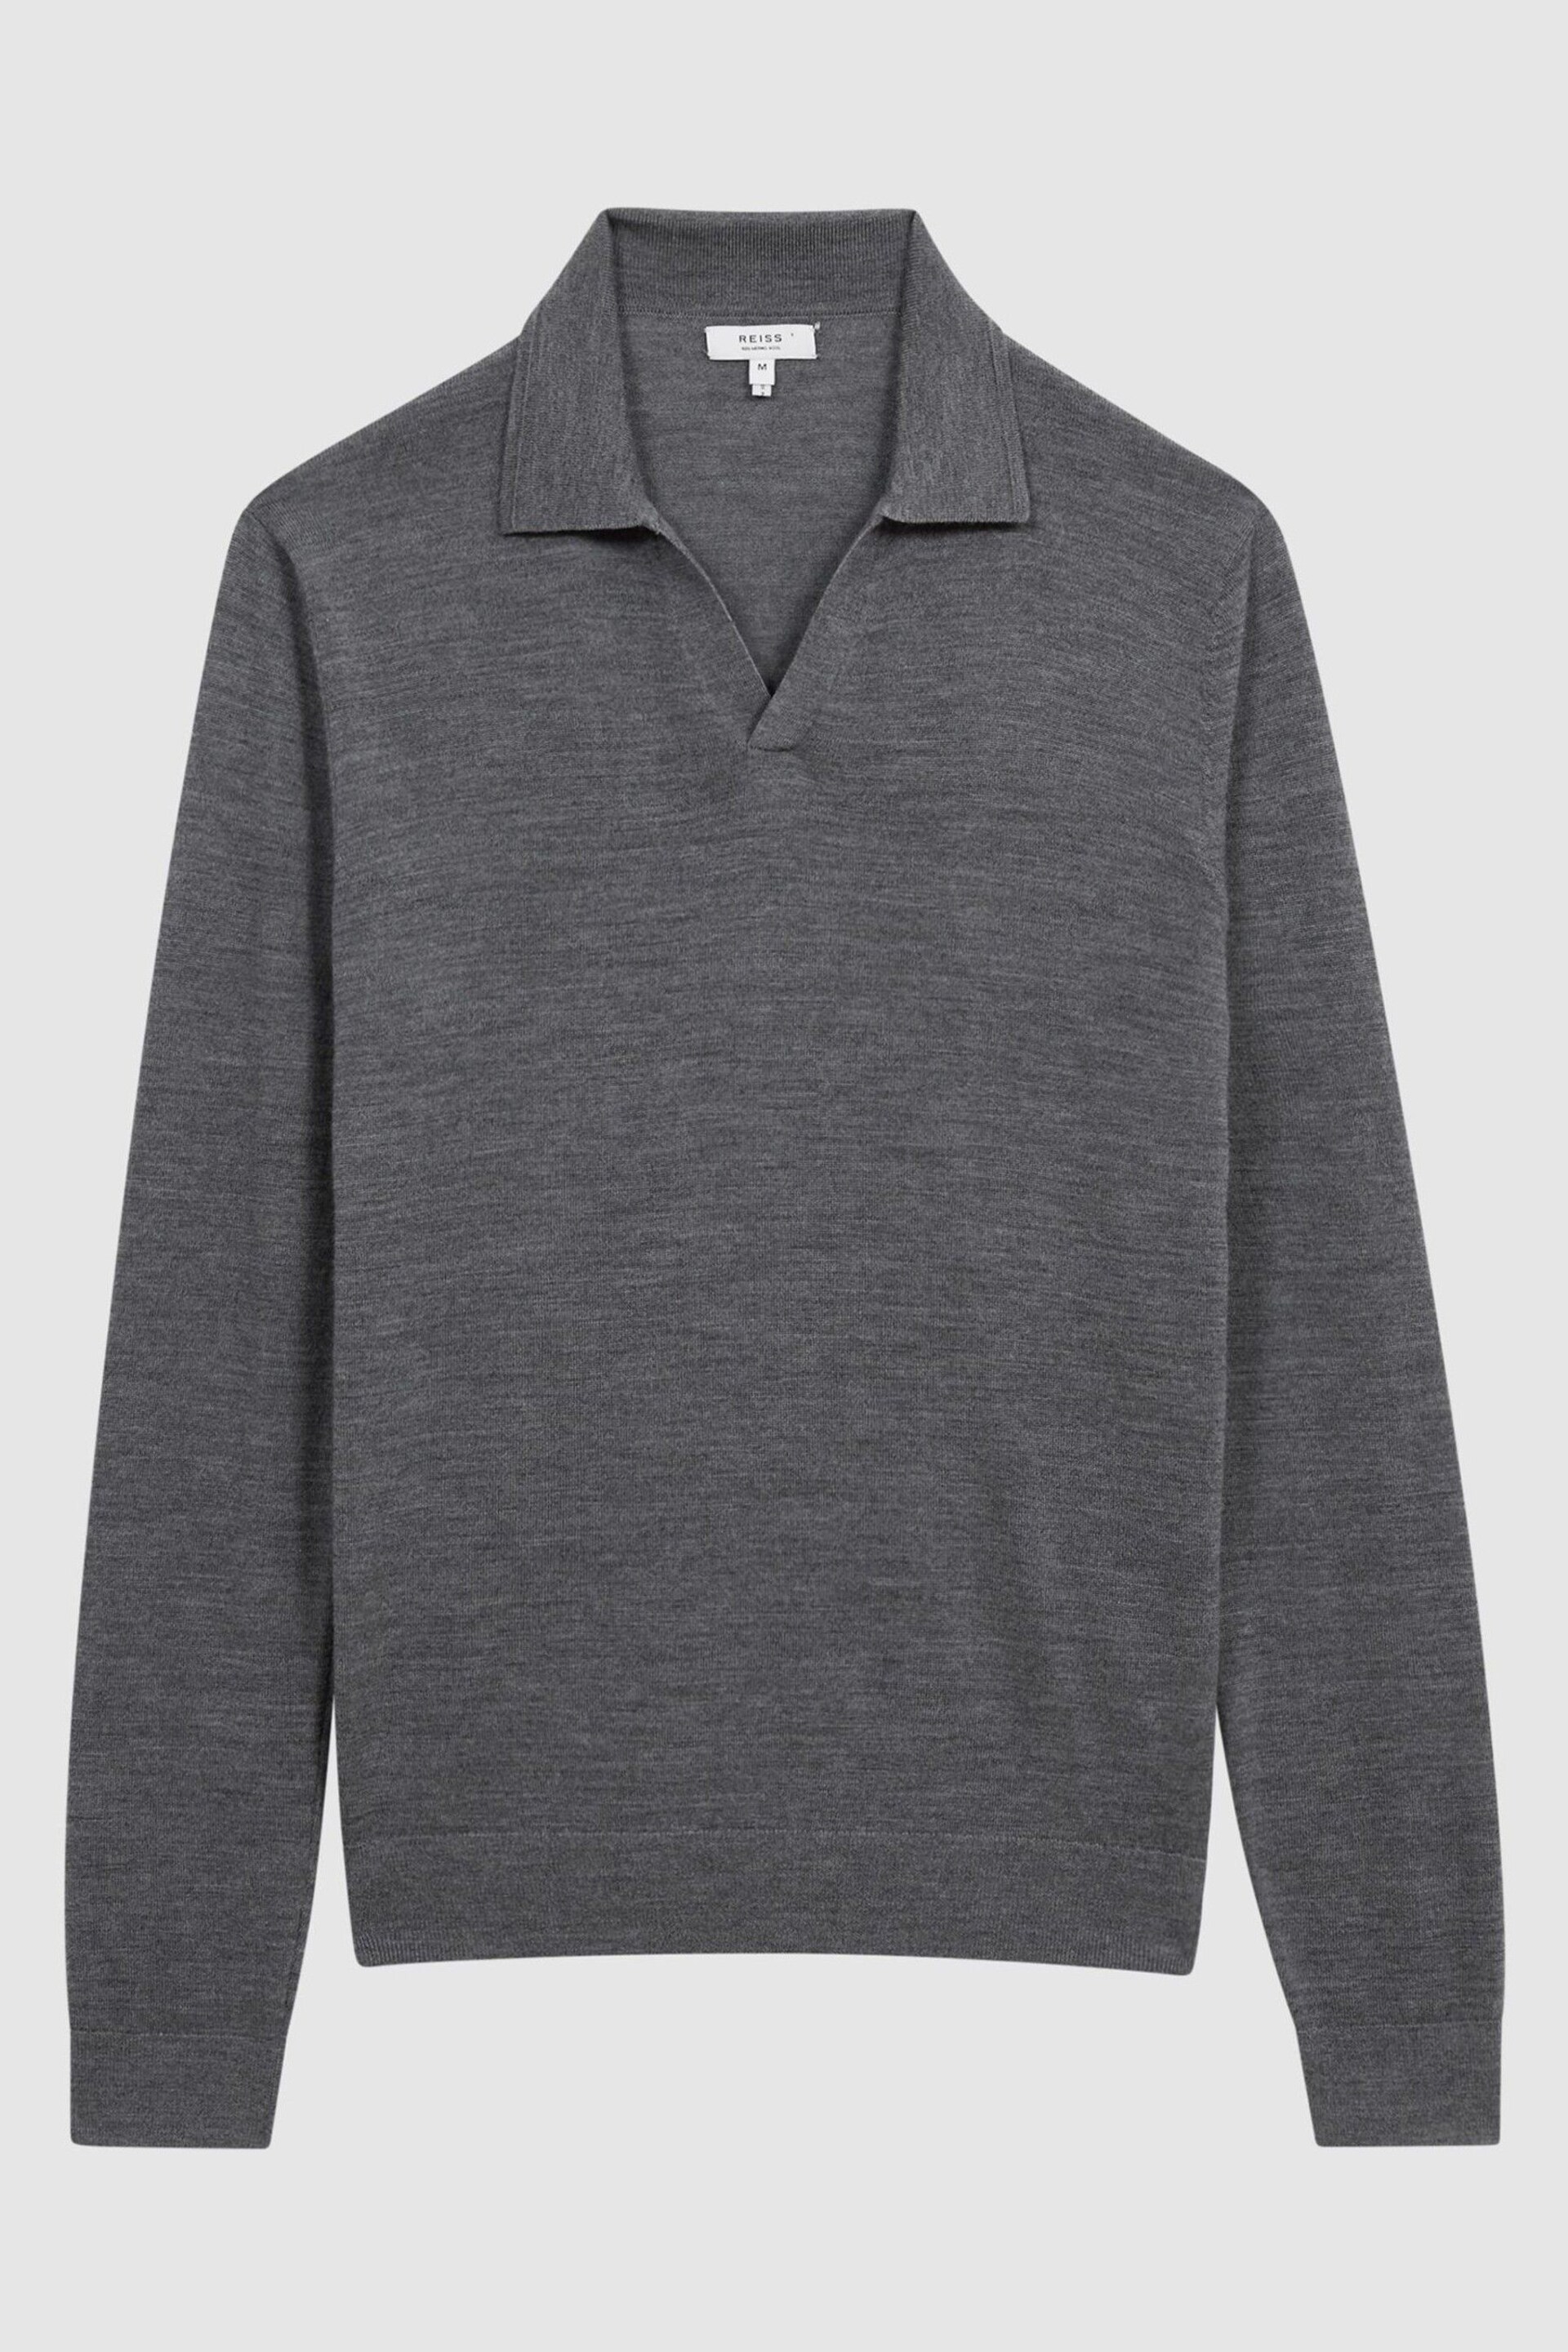 Reiss Mid Grey Melange Milburn Merino Wool Open Collar Polo Shirt - Image 2 of 7